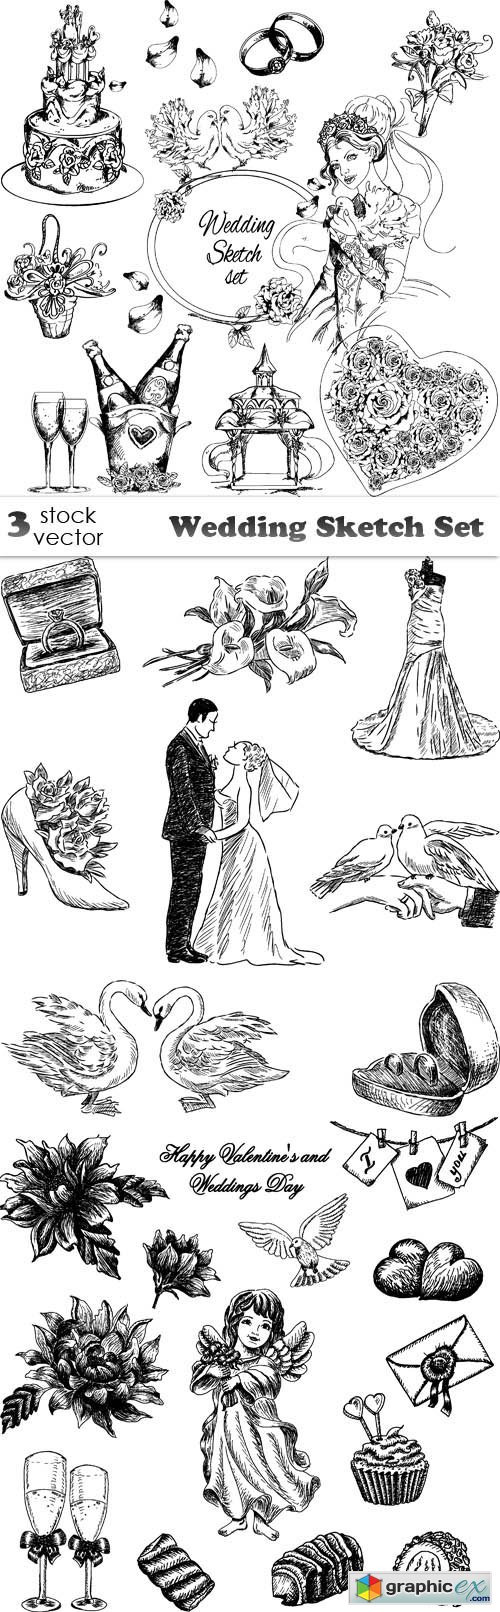 Vectors - Wedding Sketch Set